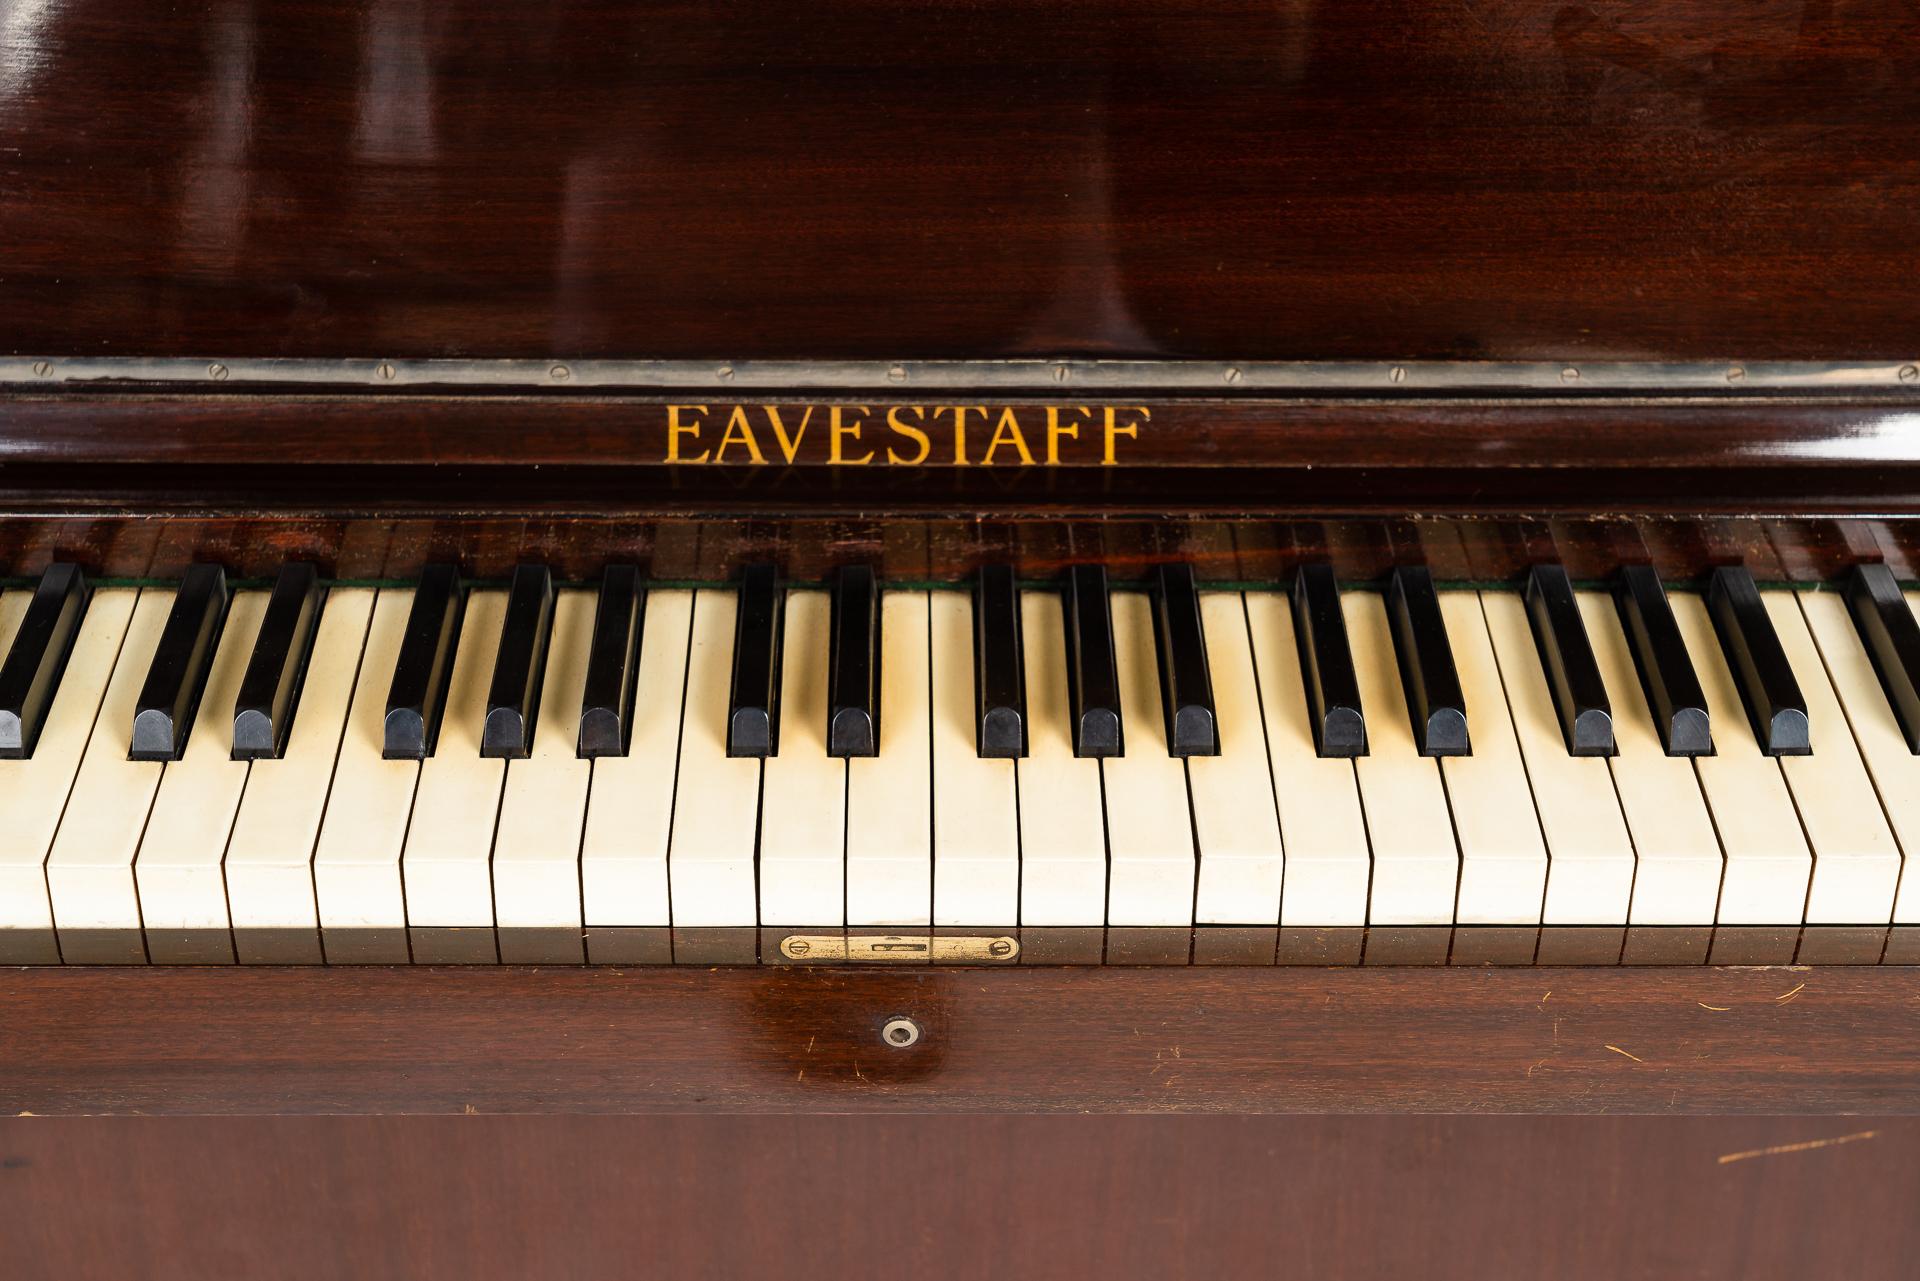 eavestaff mini royal piano